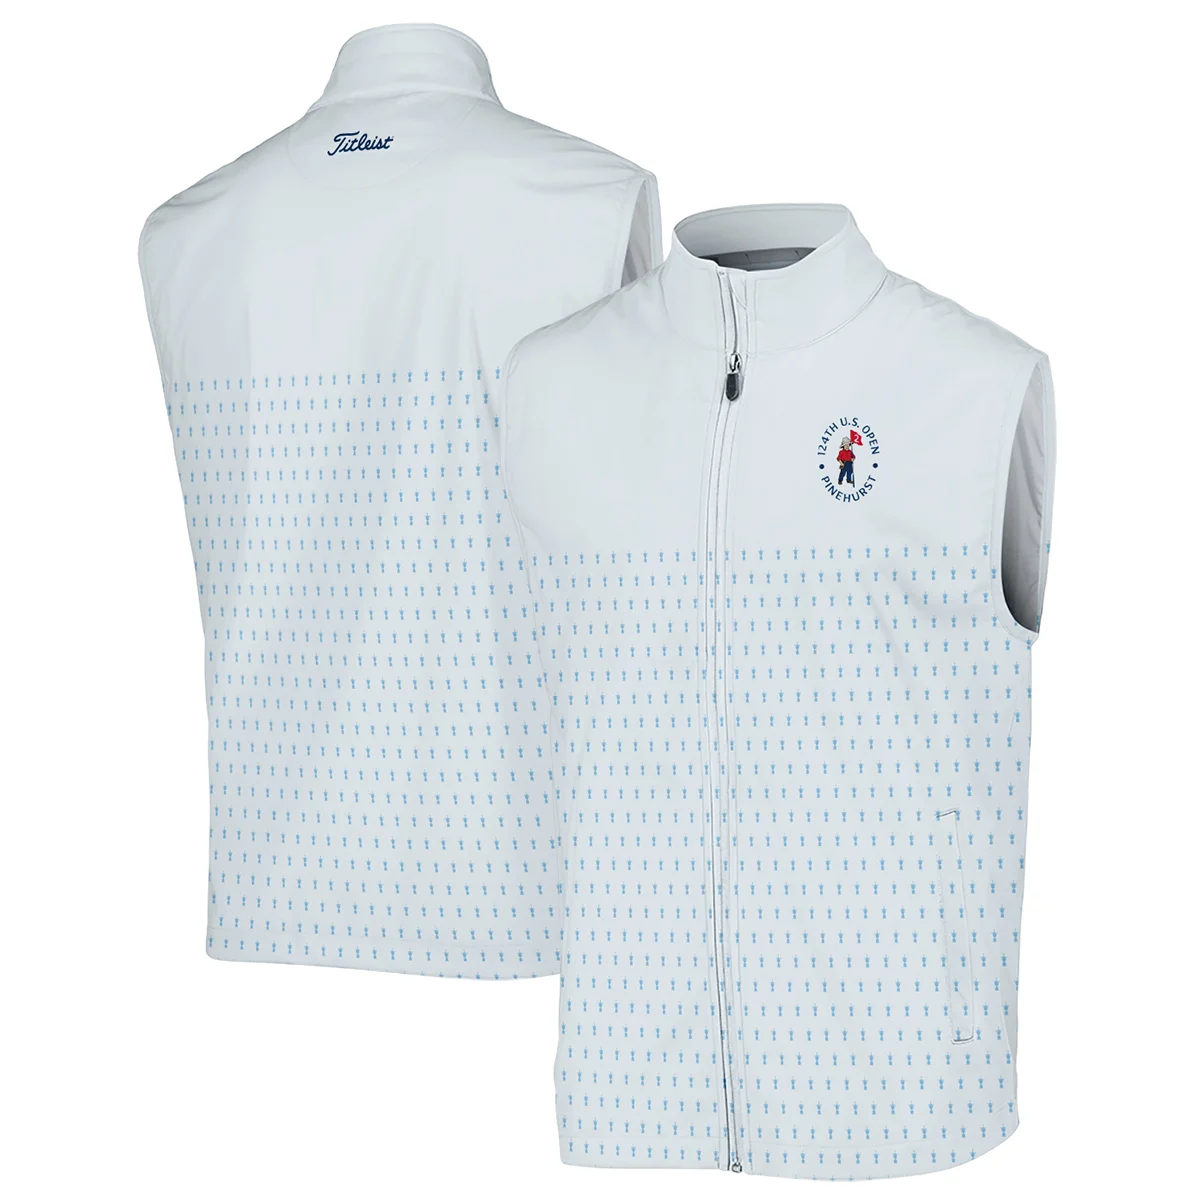 U.S Open Trophy Pattern Light Blue 124th U.S. Open Pinehurst Titleist Polo Shirt Style Classic Polo Shirt For Men